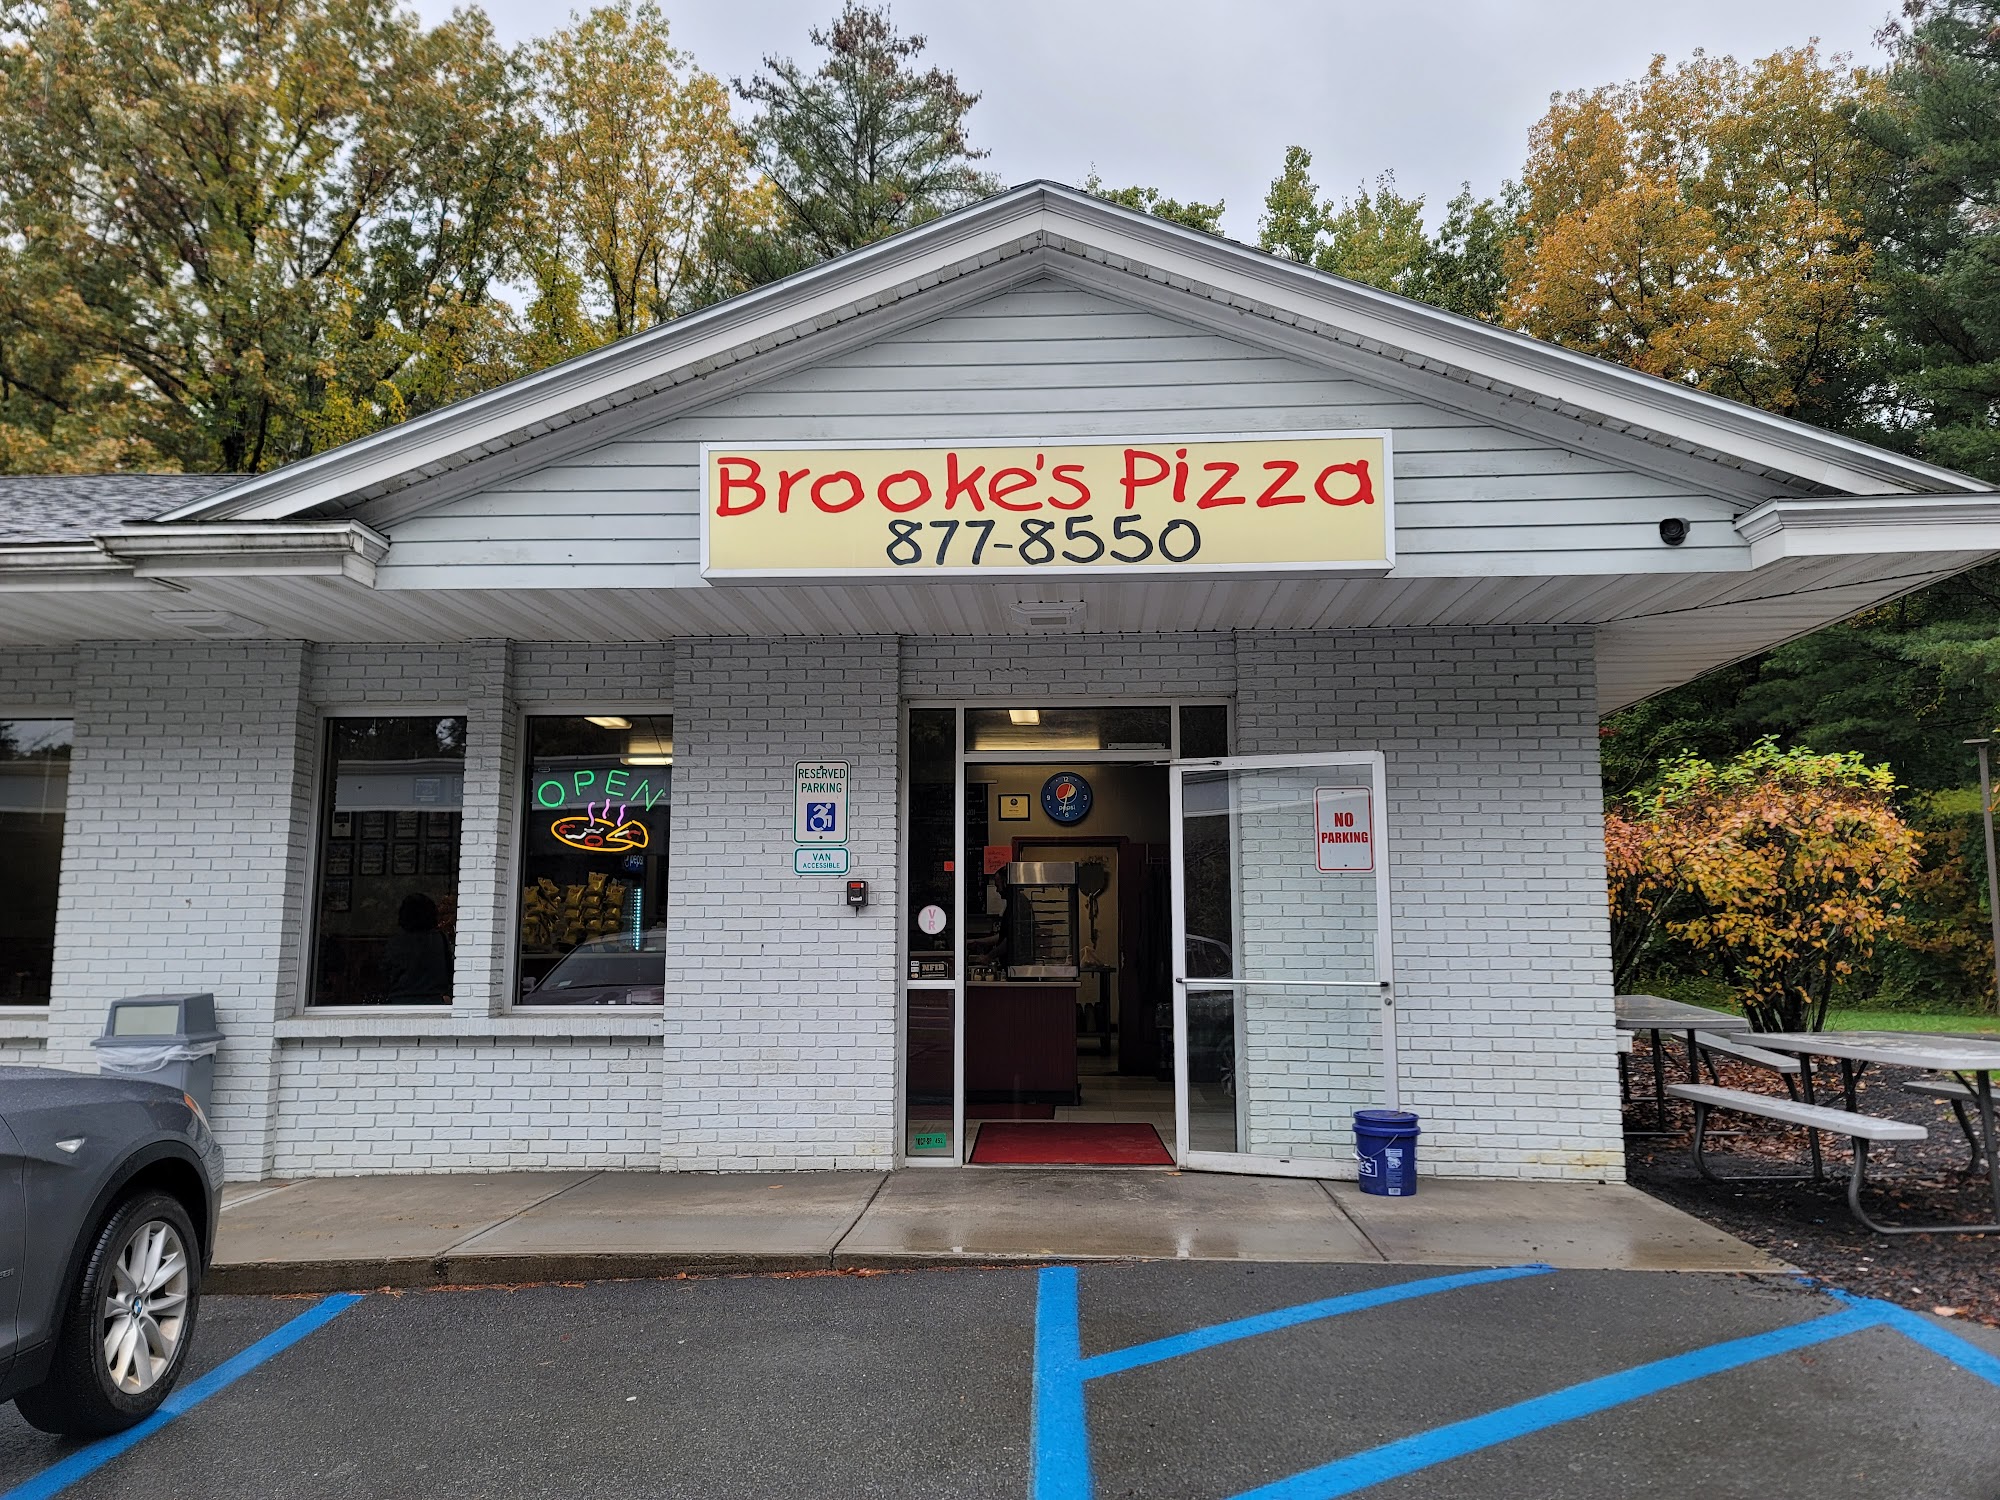 Brooke's Pizza